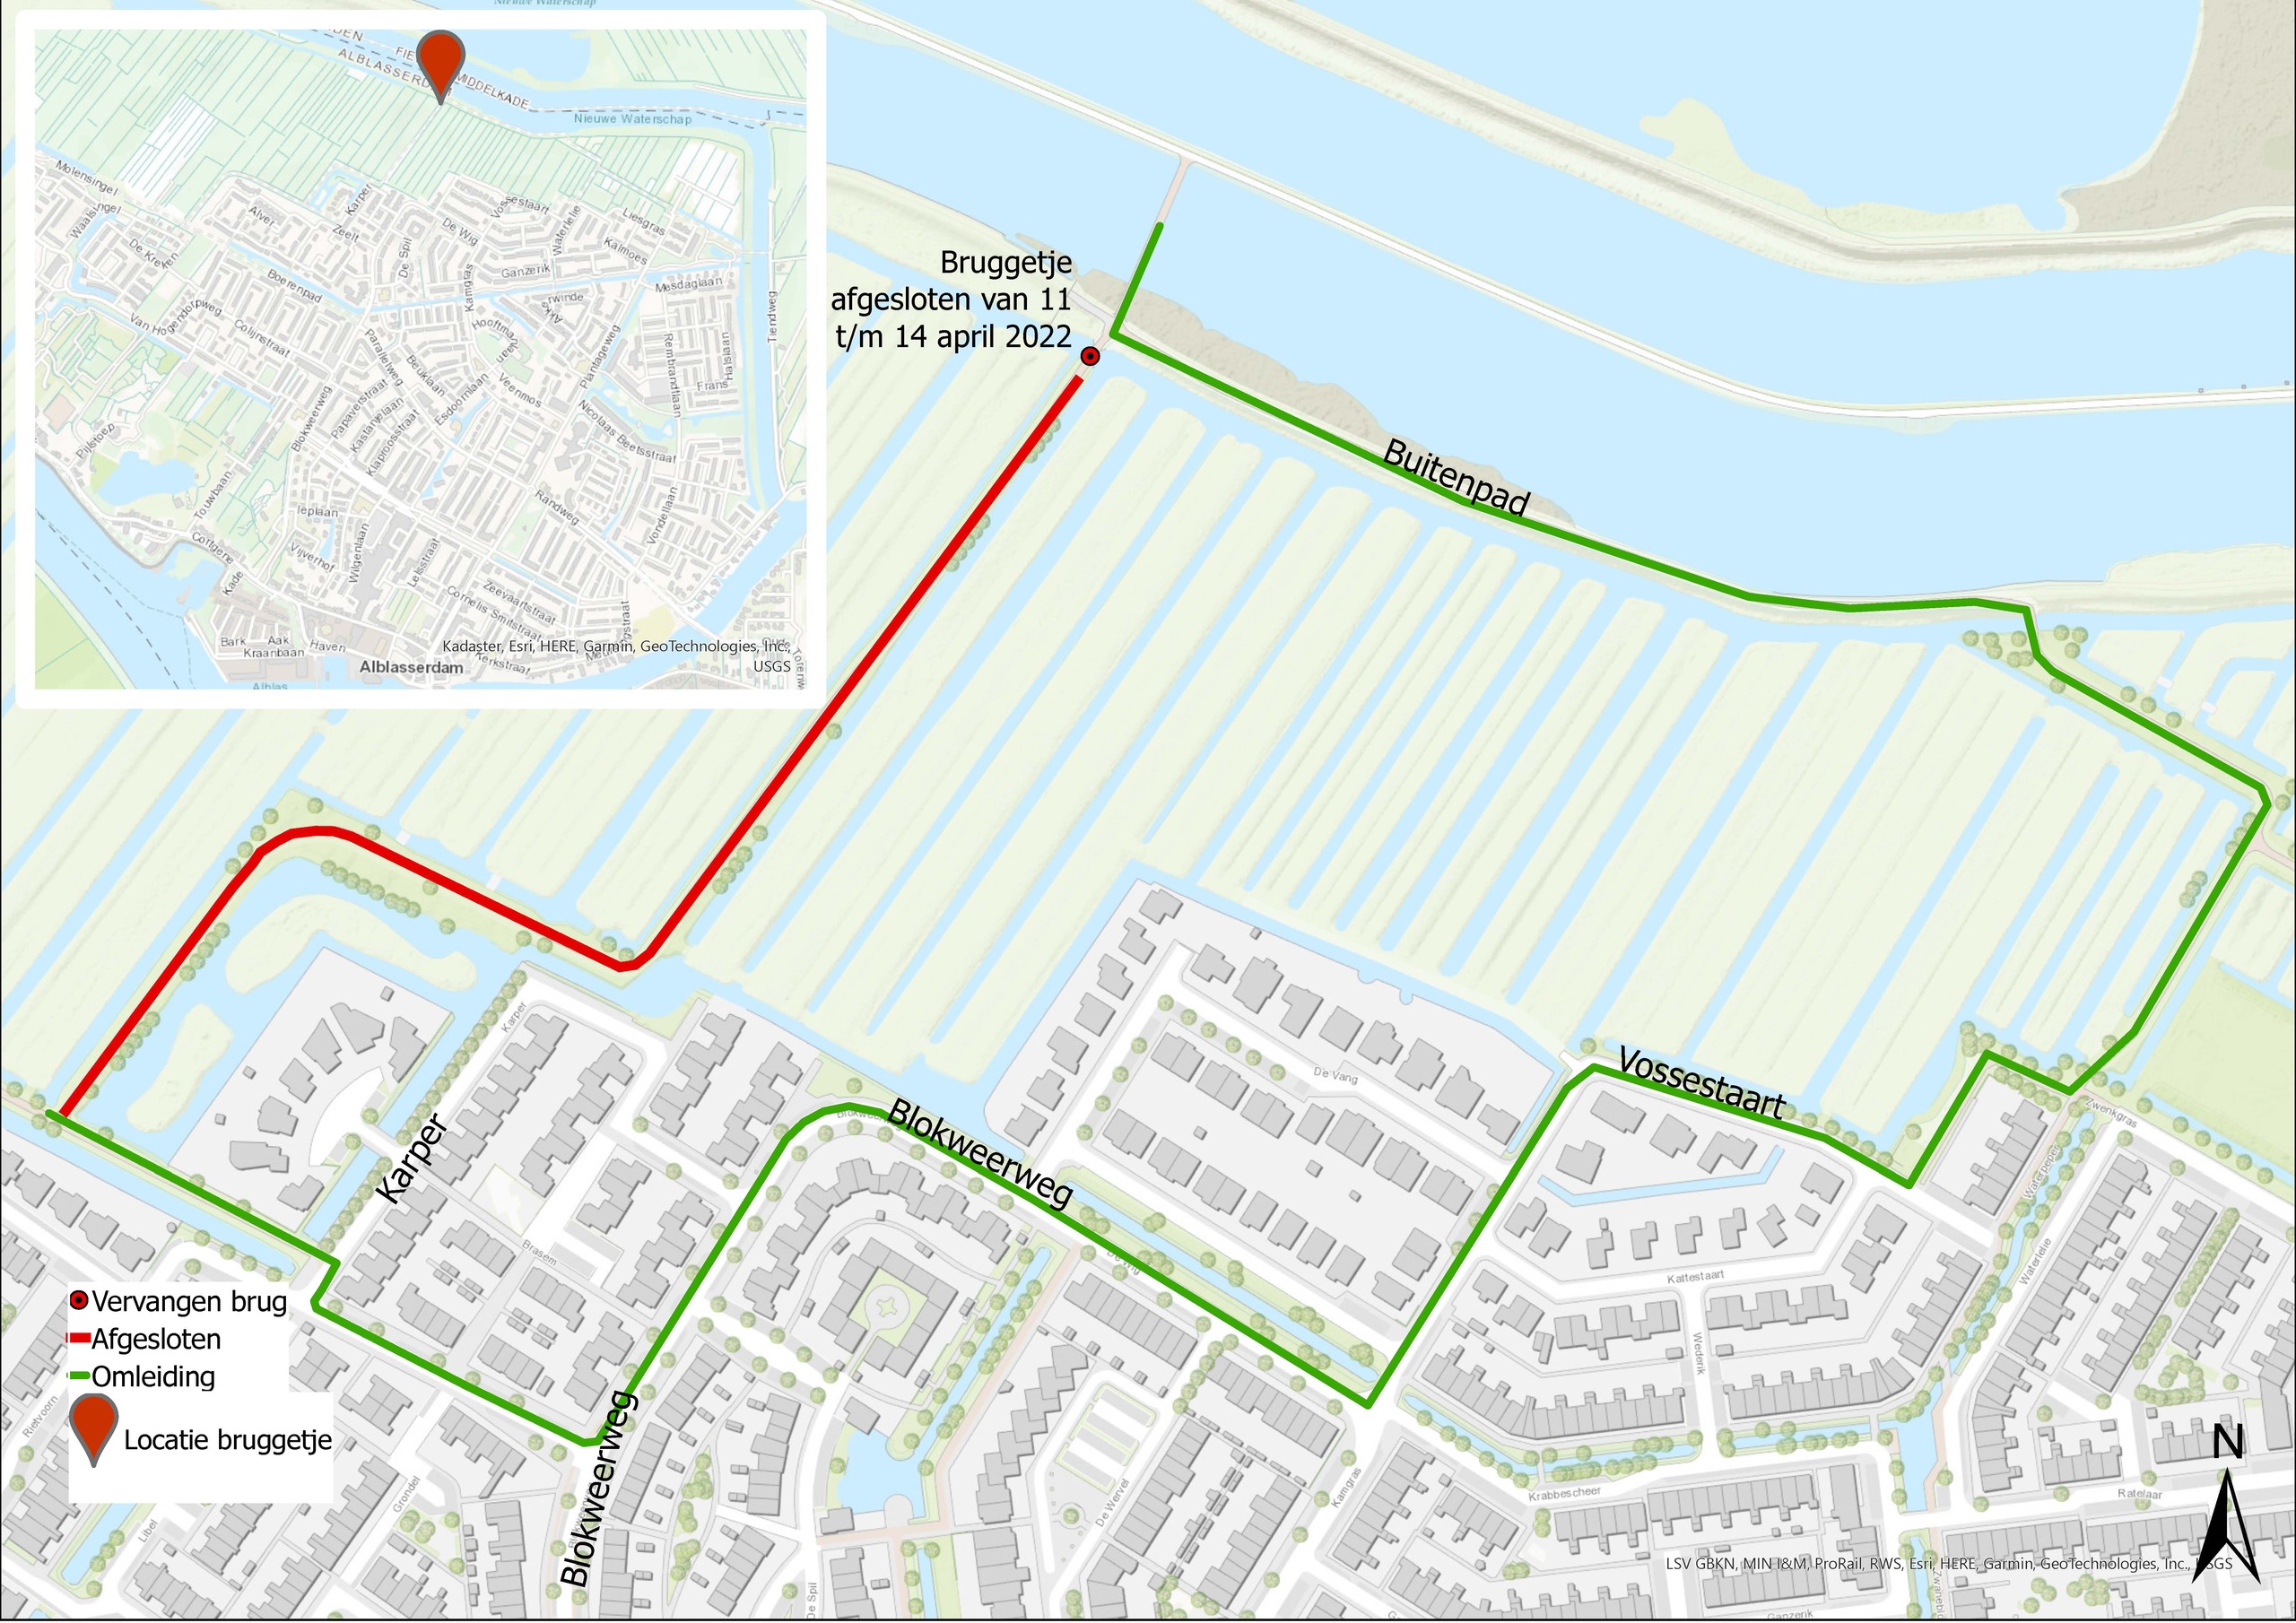 Kaart locatie en omleidingsroute ivm vervanging bruggetje Buitenpad